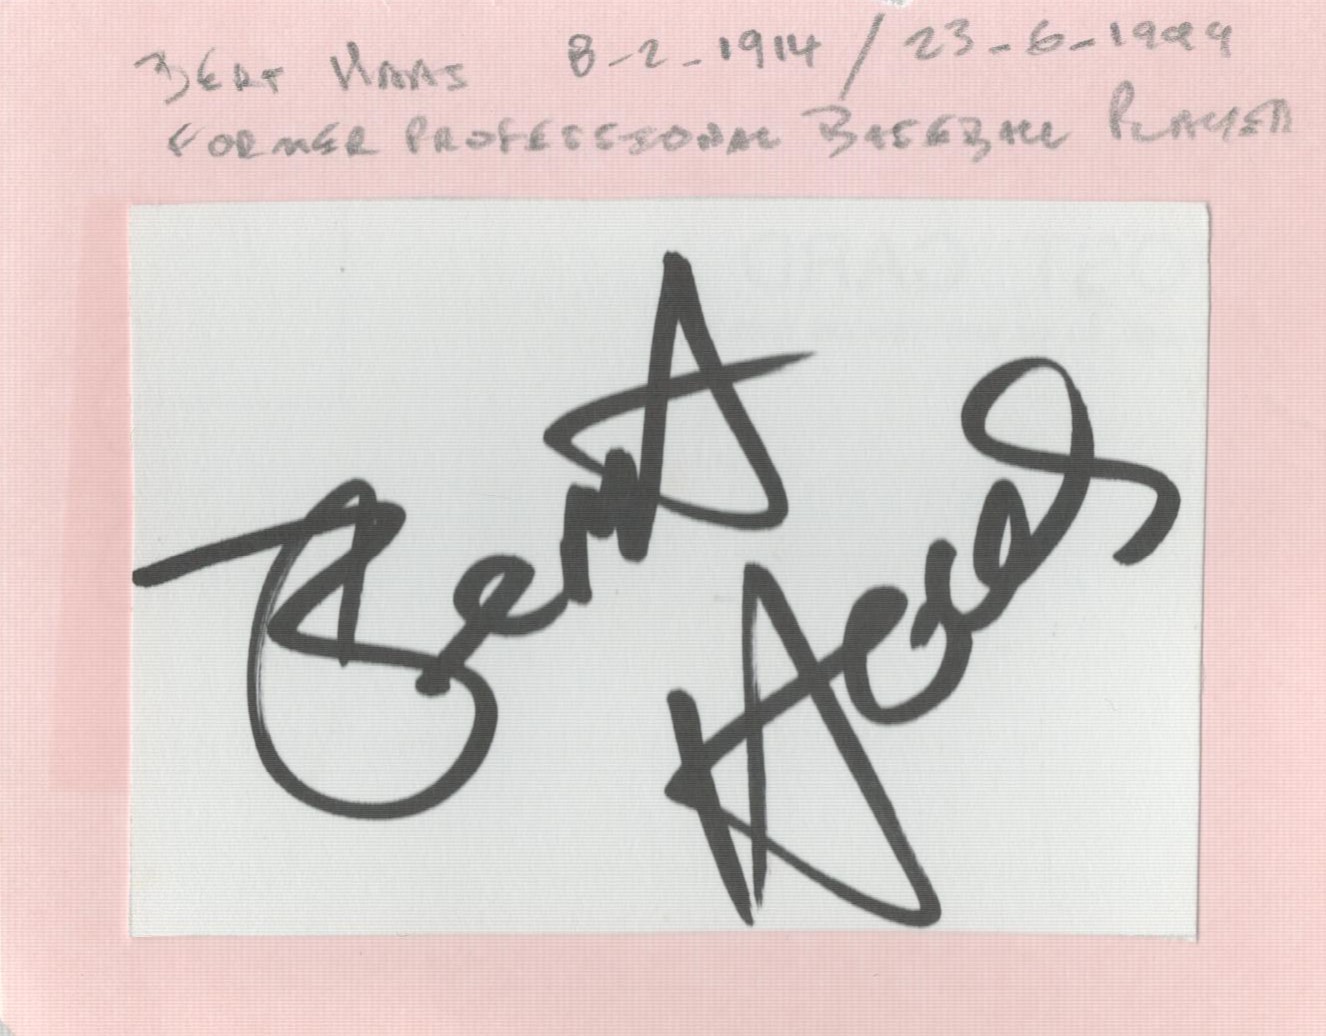 Rare 1930s Baseball legend Bert Haas signed card fixed to autograph album page. Berthold John